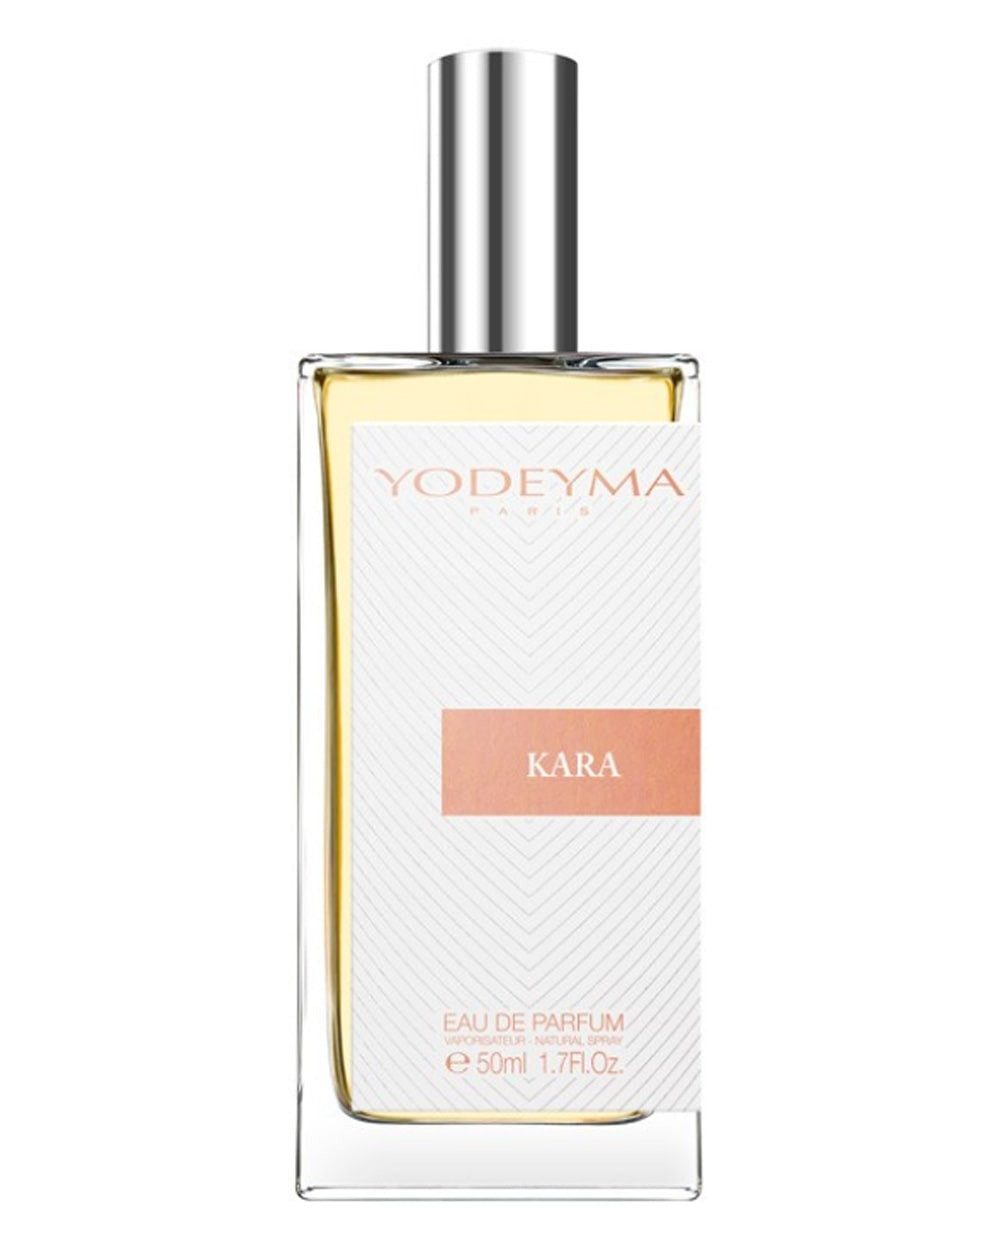 Eau de Parfum YODEYMA Parfum Kara - Eau de Parfum für Damen 50 ml